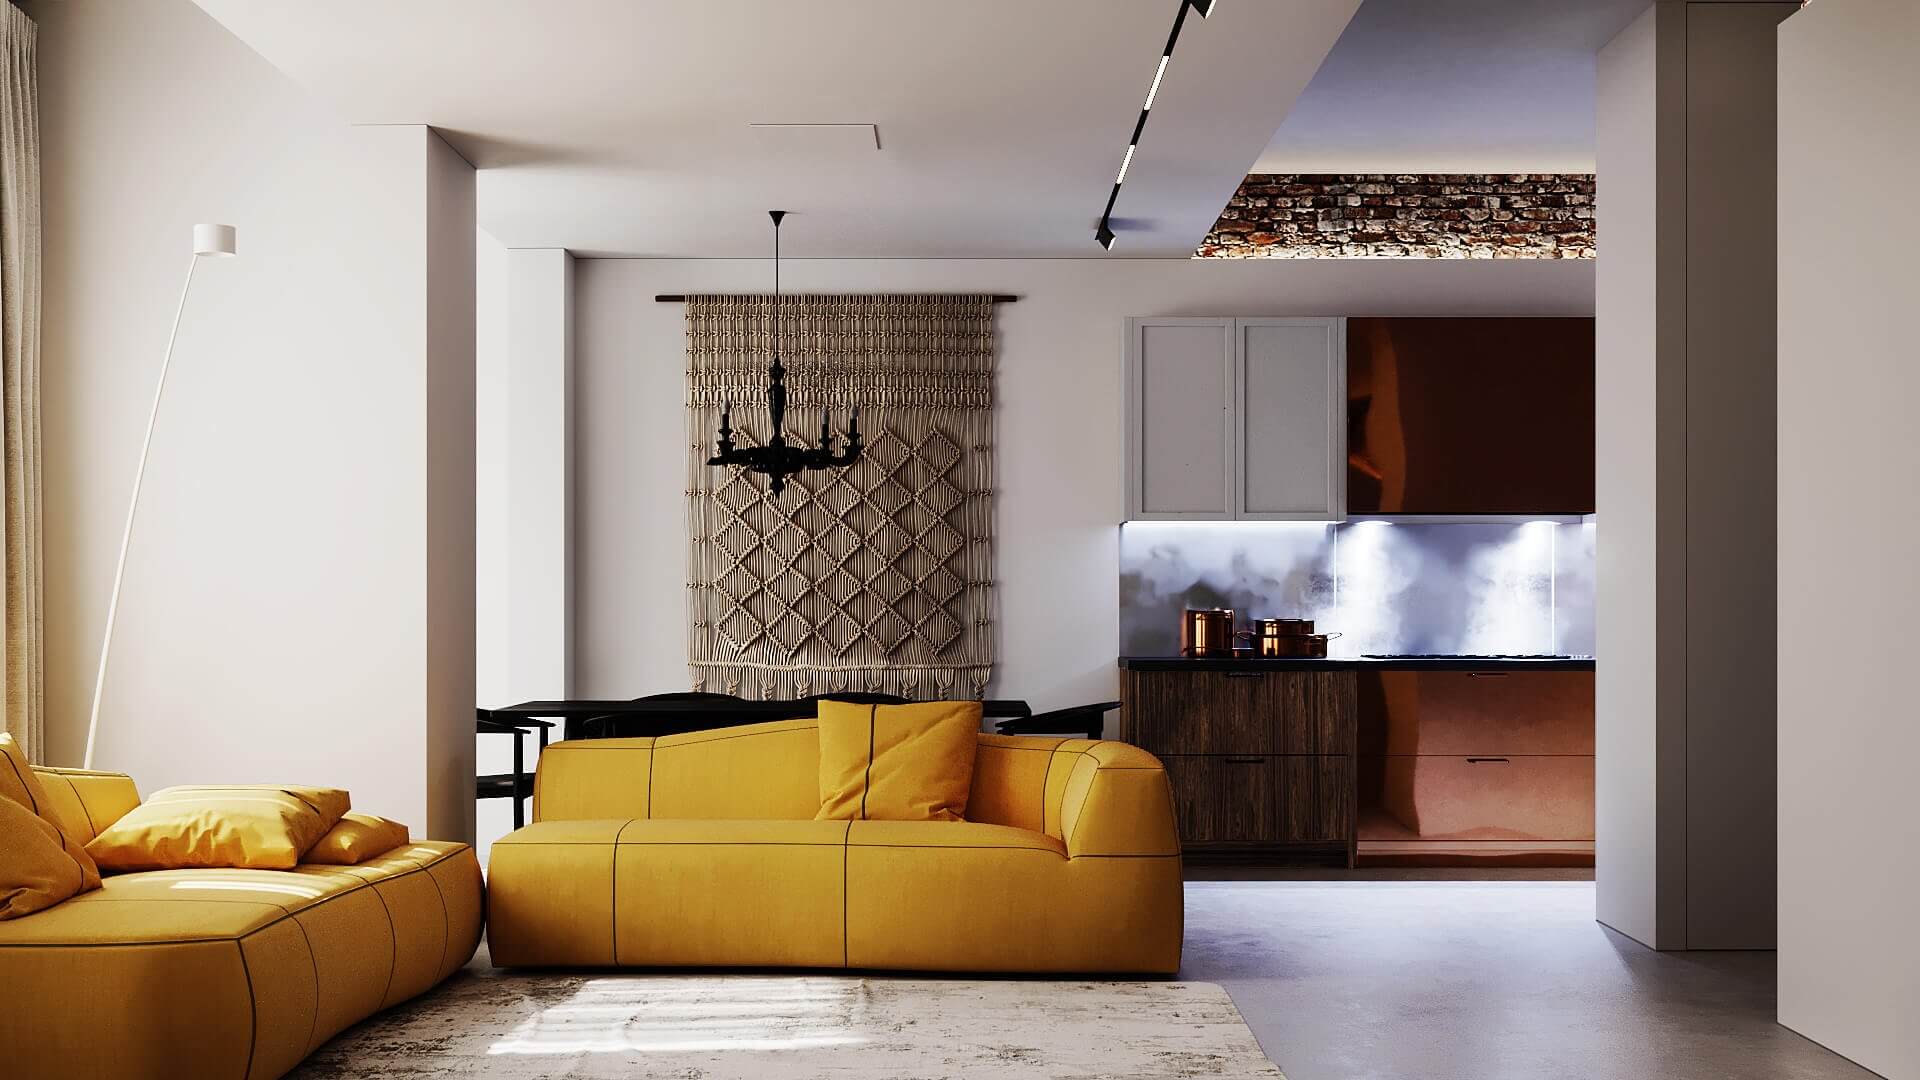 Oasis Apartment living room kitchen design - cgi visualization